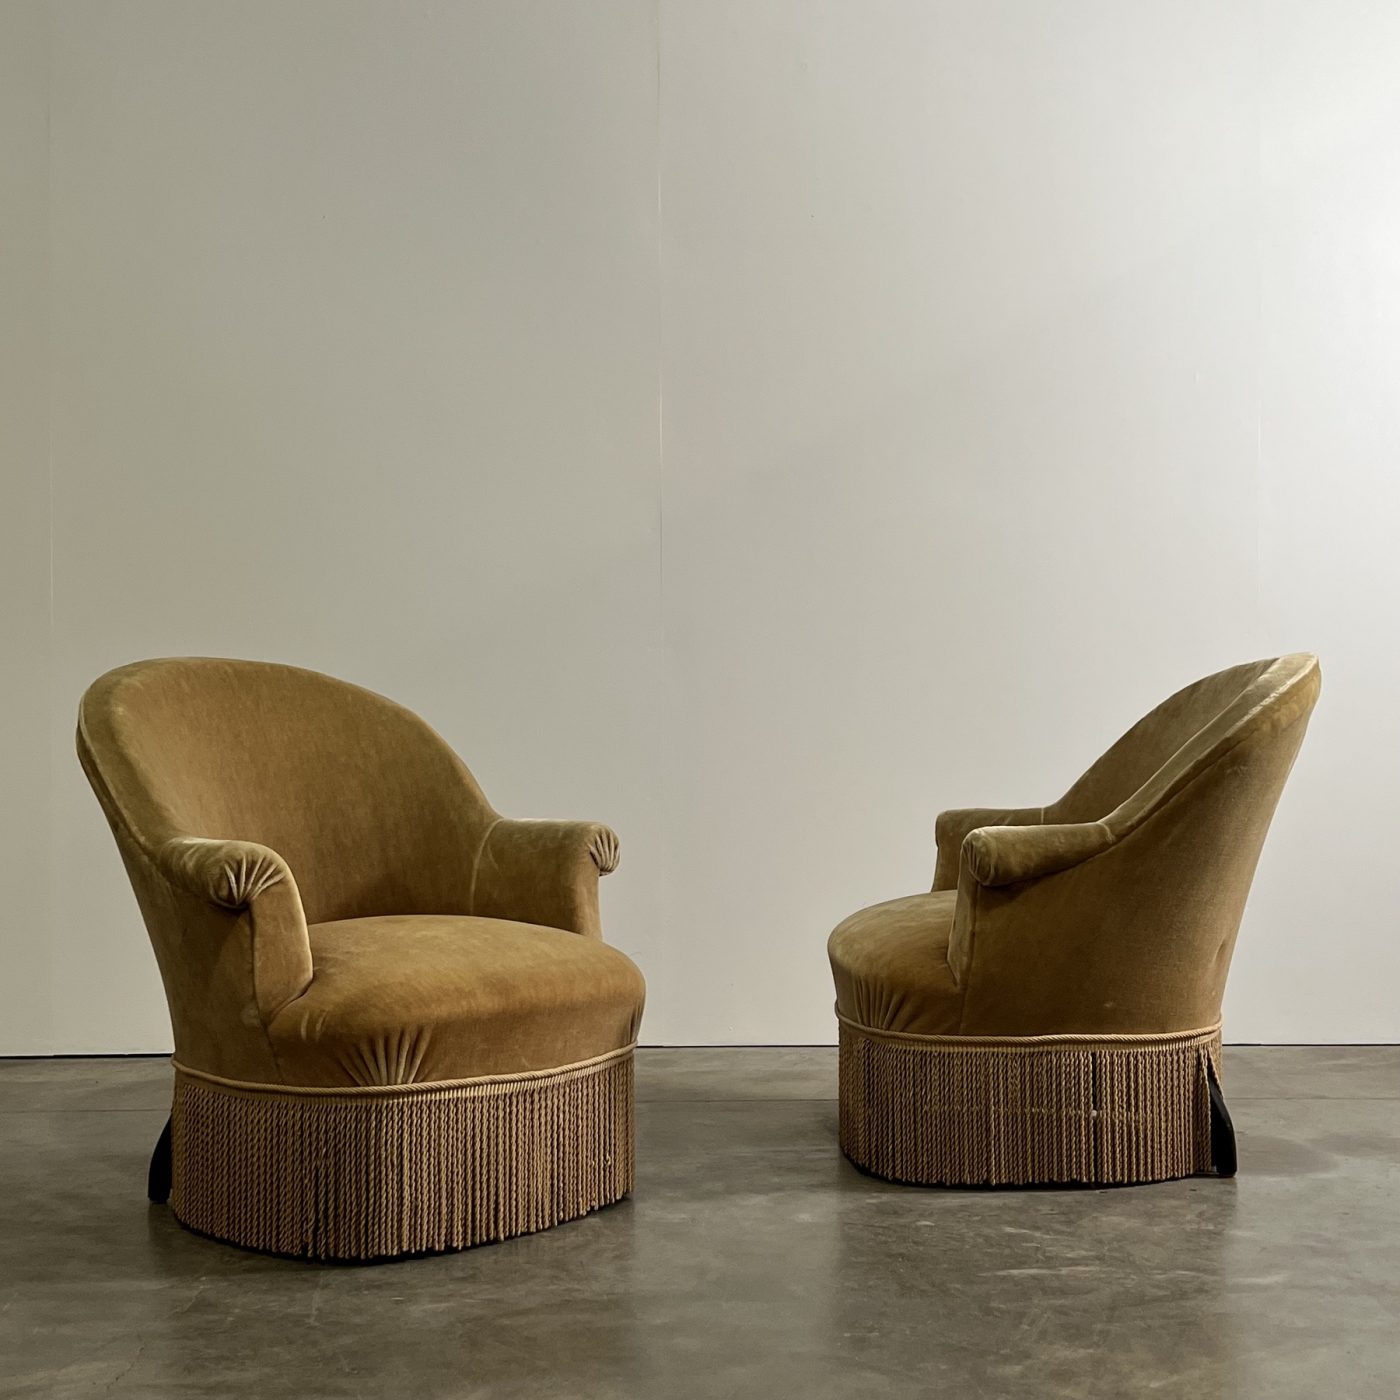 objet-vagabond-napoleon3-chairs0004